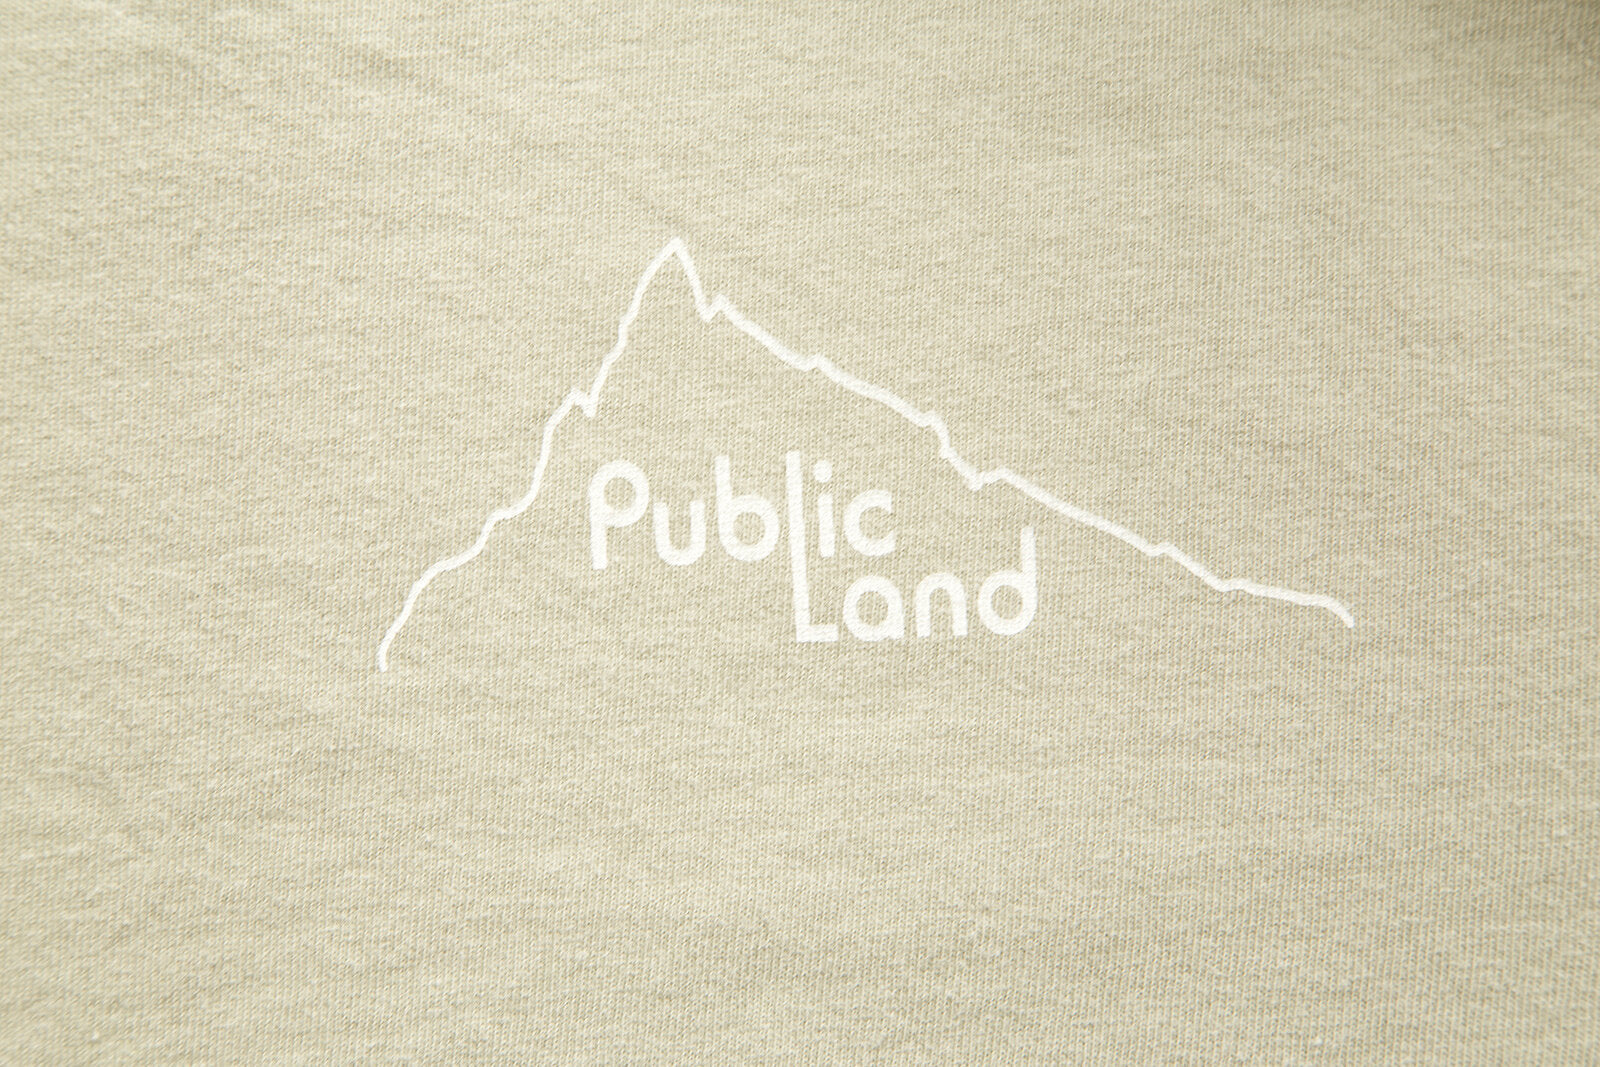 Public Land Logo Shirt - Sandstone